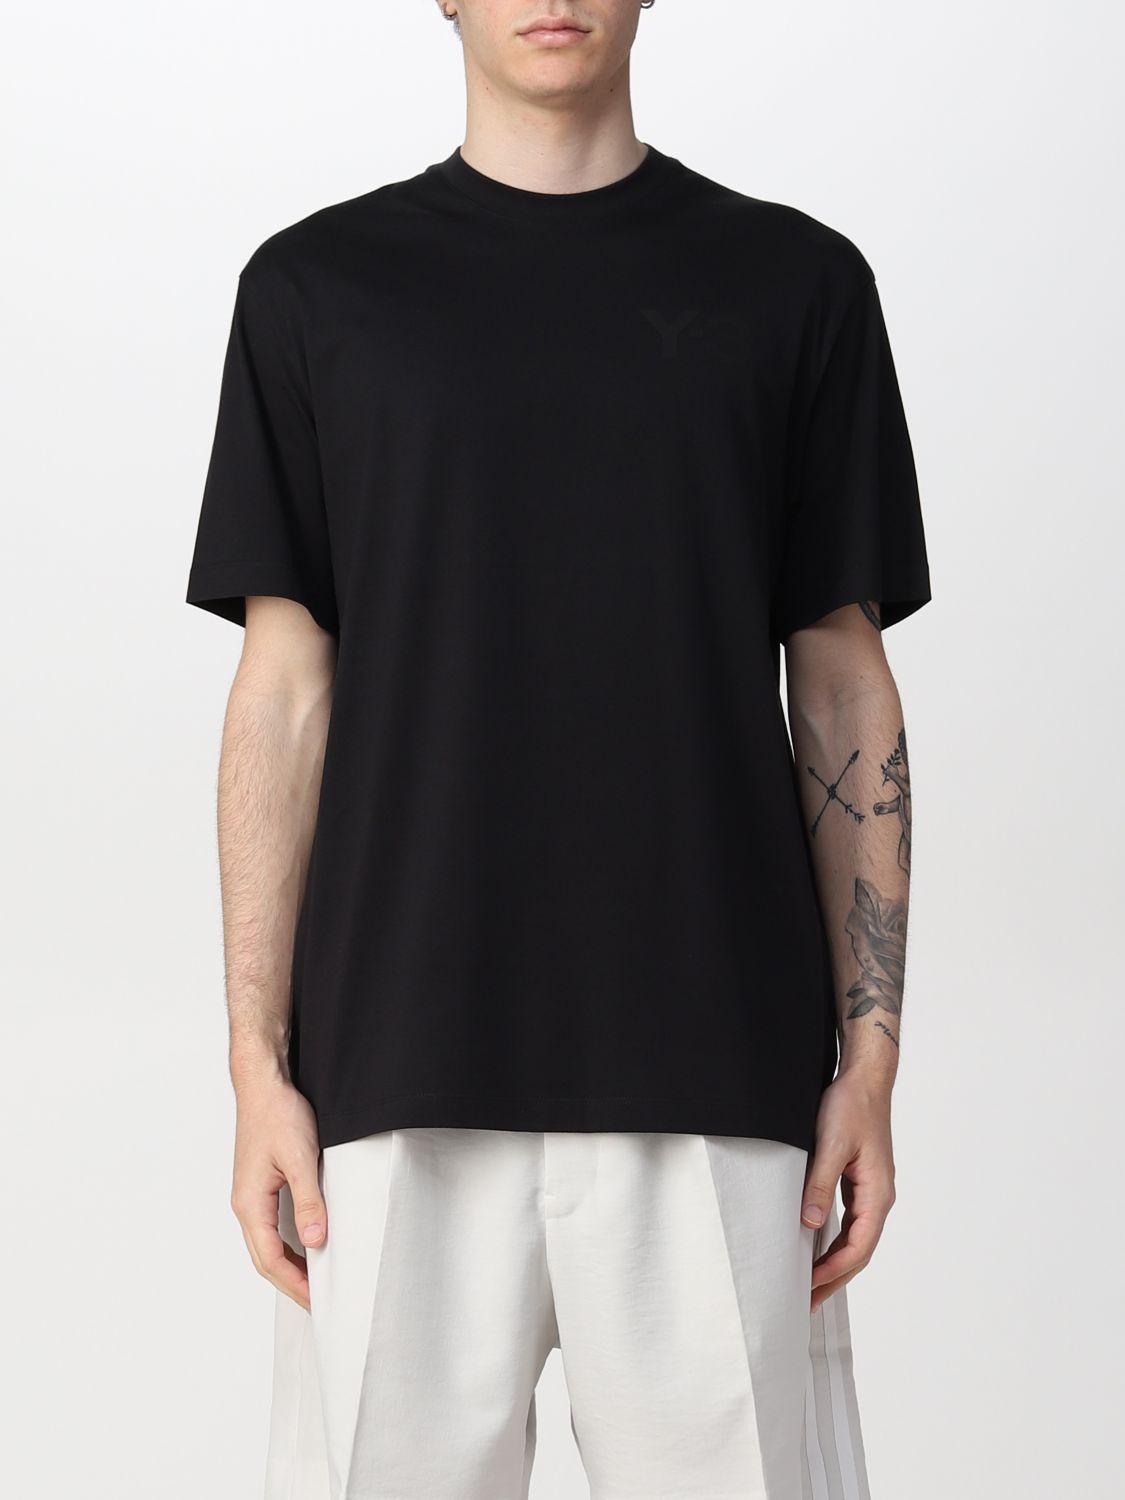 Y-3: T-shirt men - Black | Y-3 t-shirt FN3358 online on GIGLIO.COM